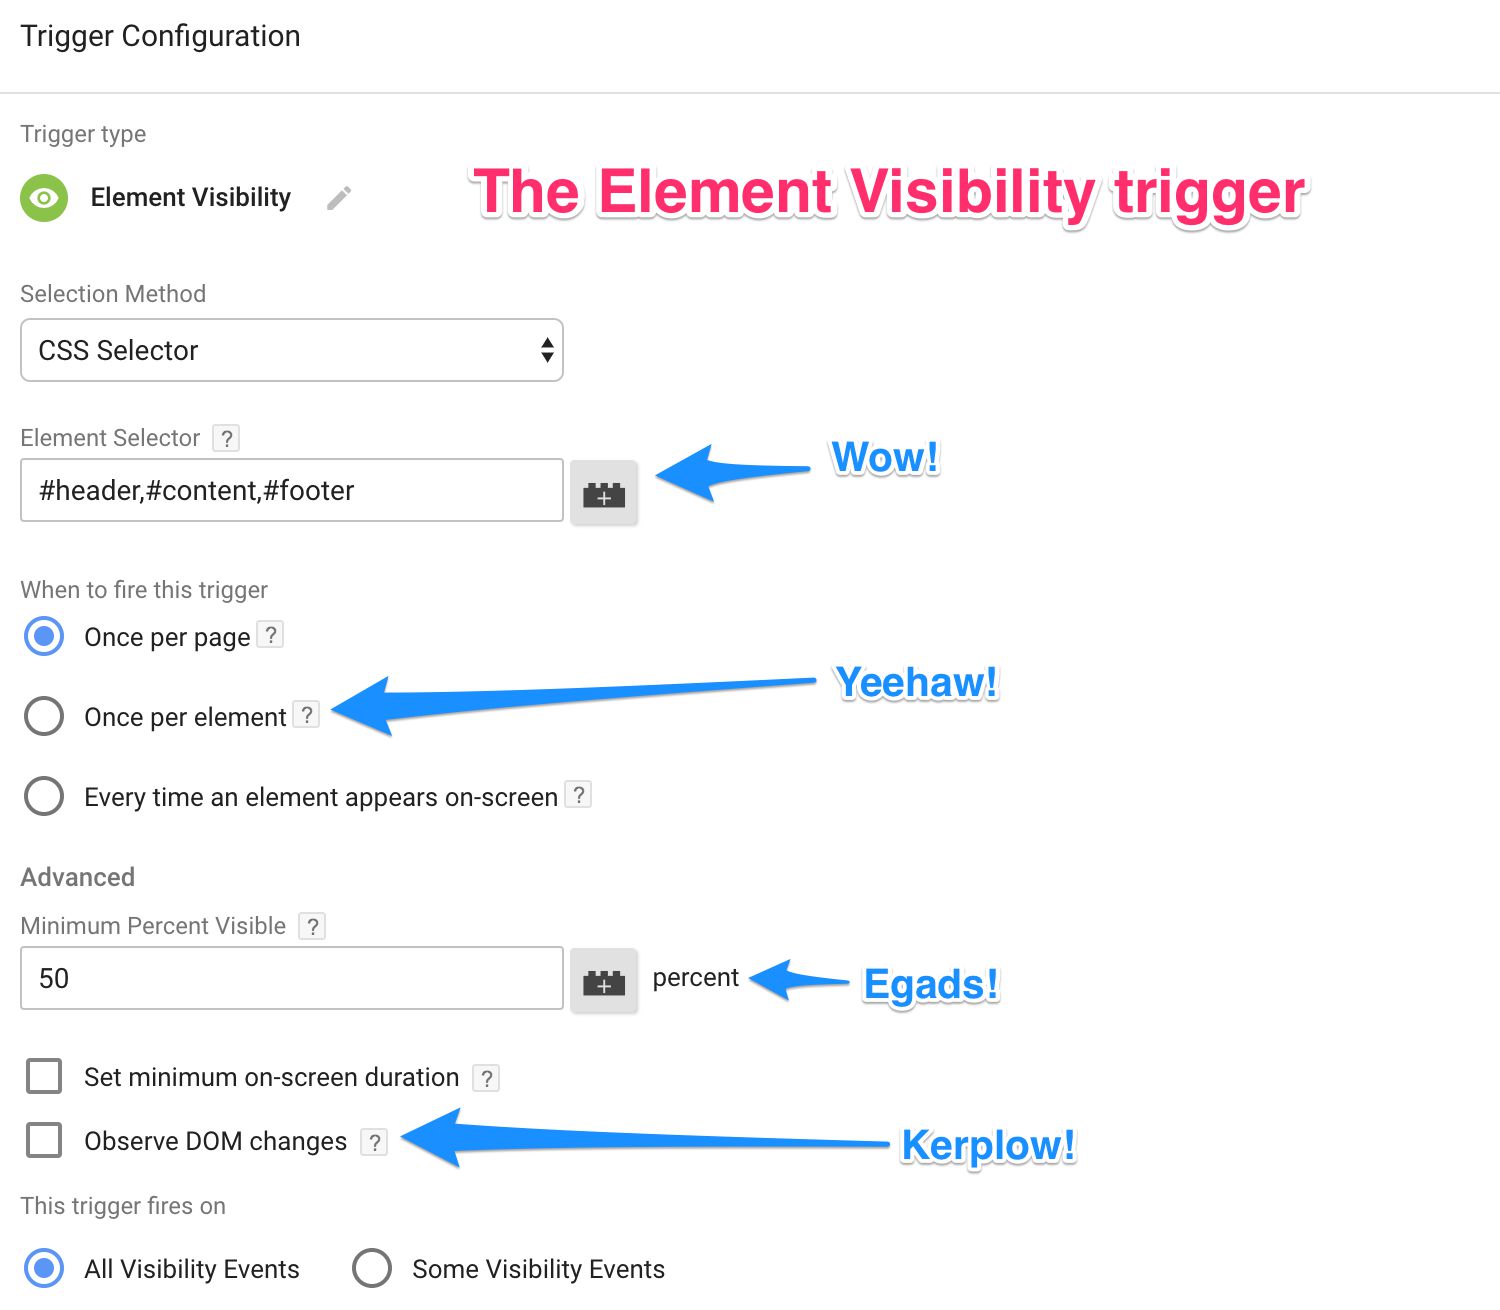 Element Visibility Trigger